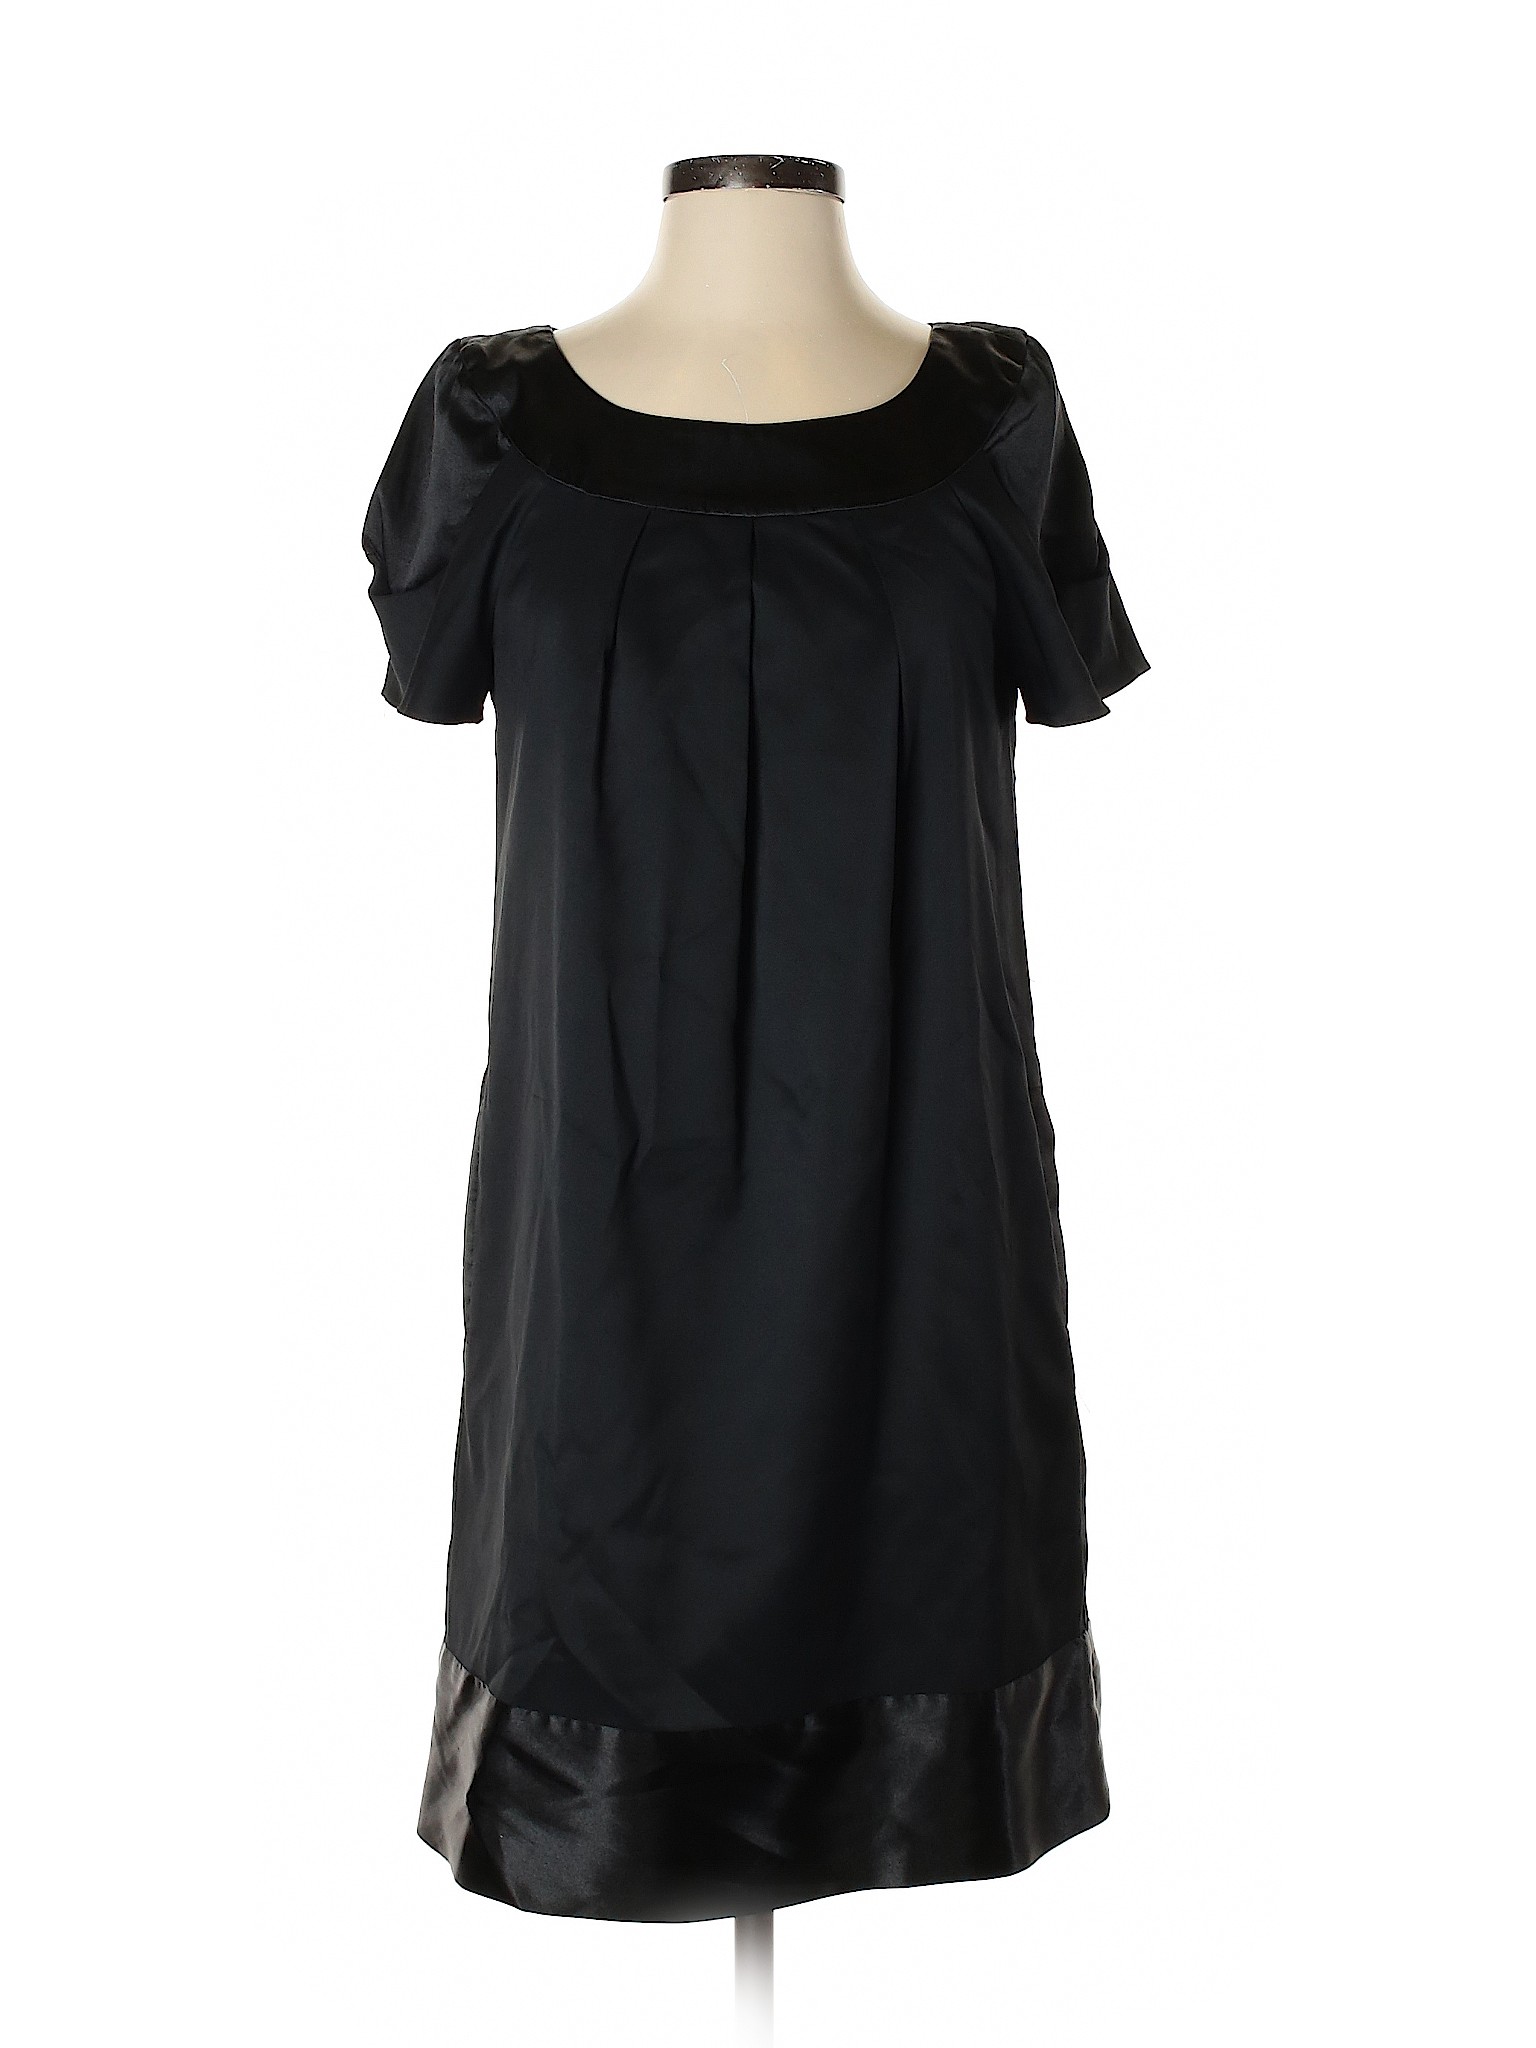 Democracy Women Black Casual Dress 2 | eBay